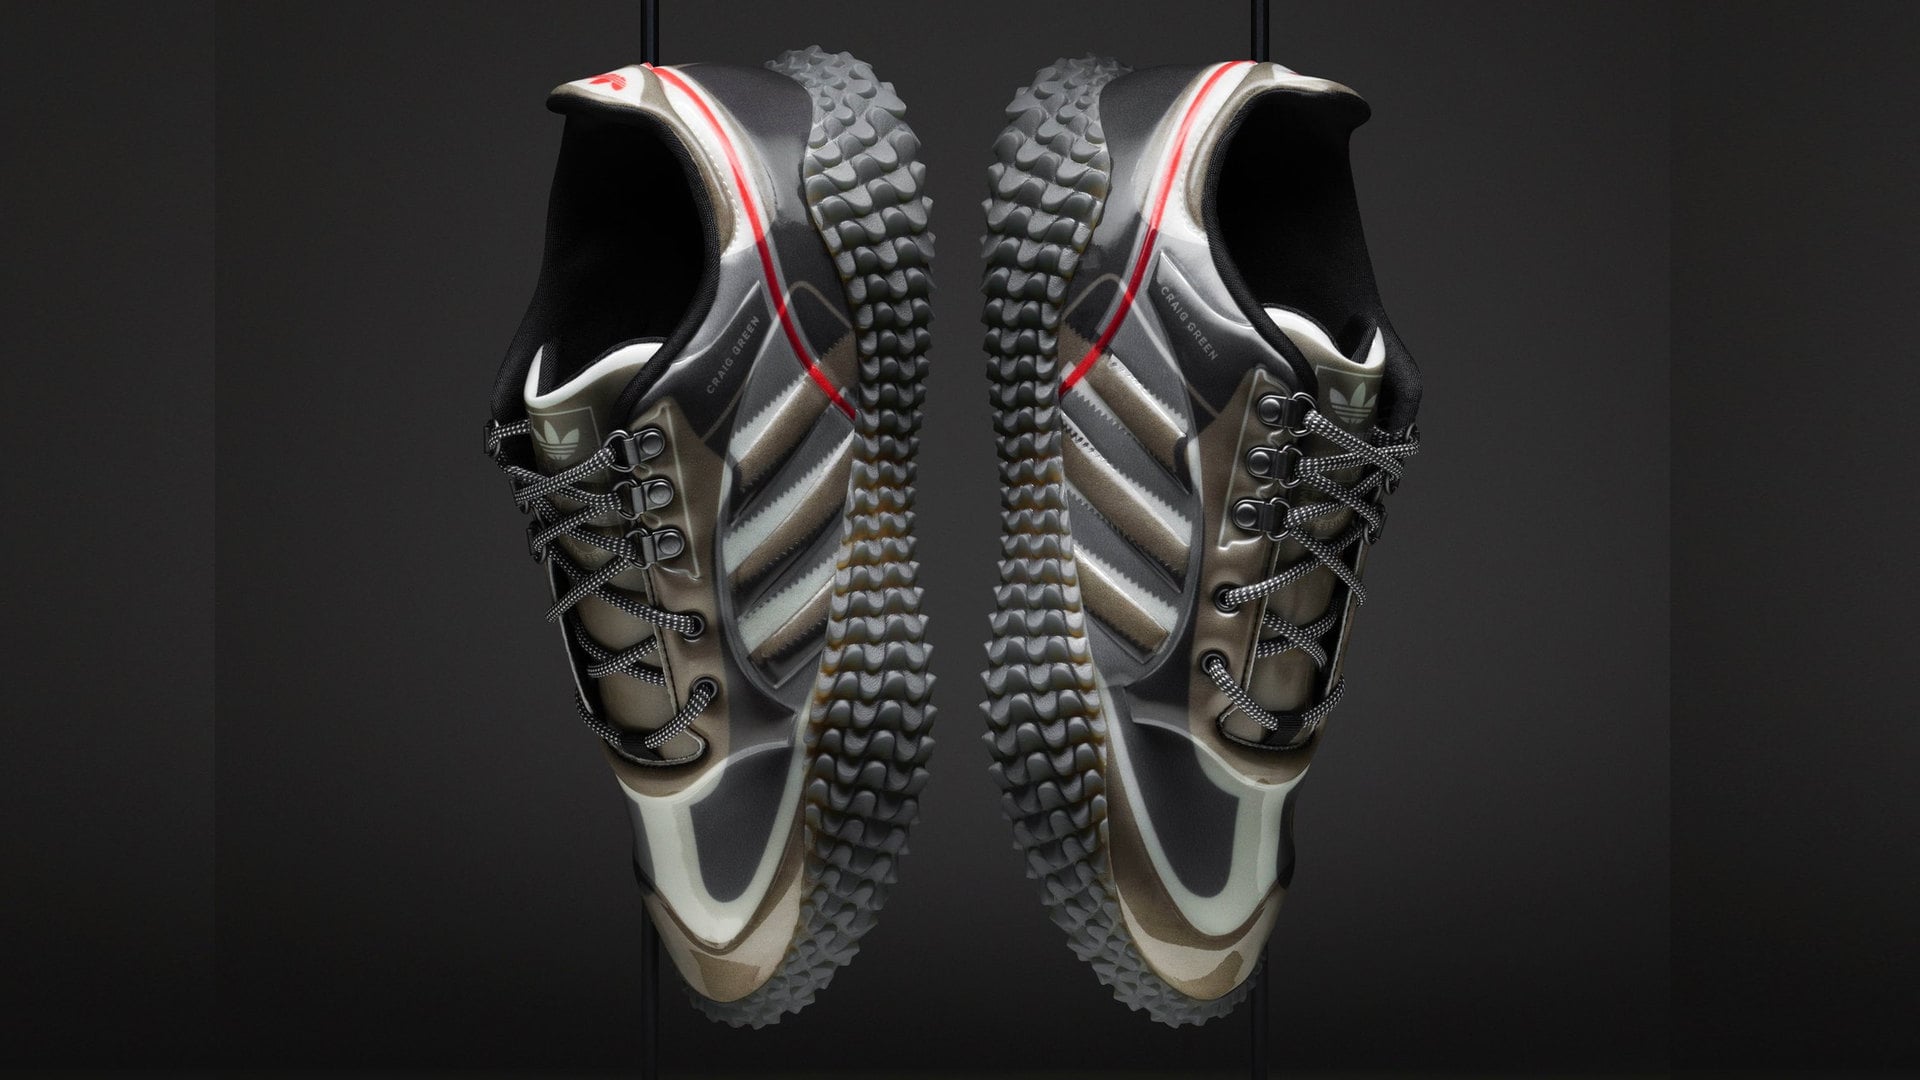 Sneakers Adidas CG Polta AKH I: symbiosis nke Climacool JawPaw na Samba |  TeraNews.net